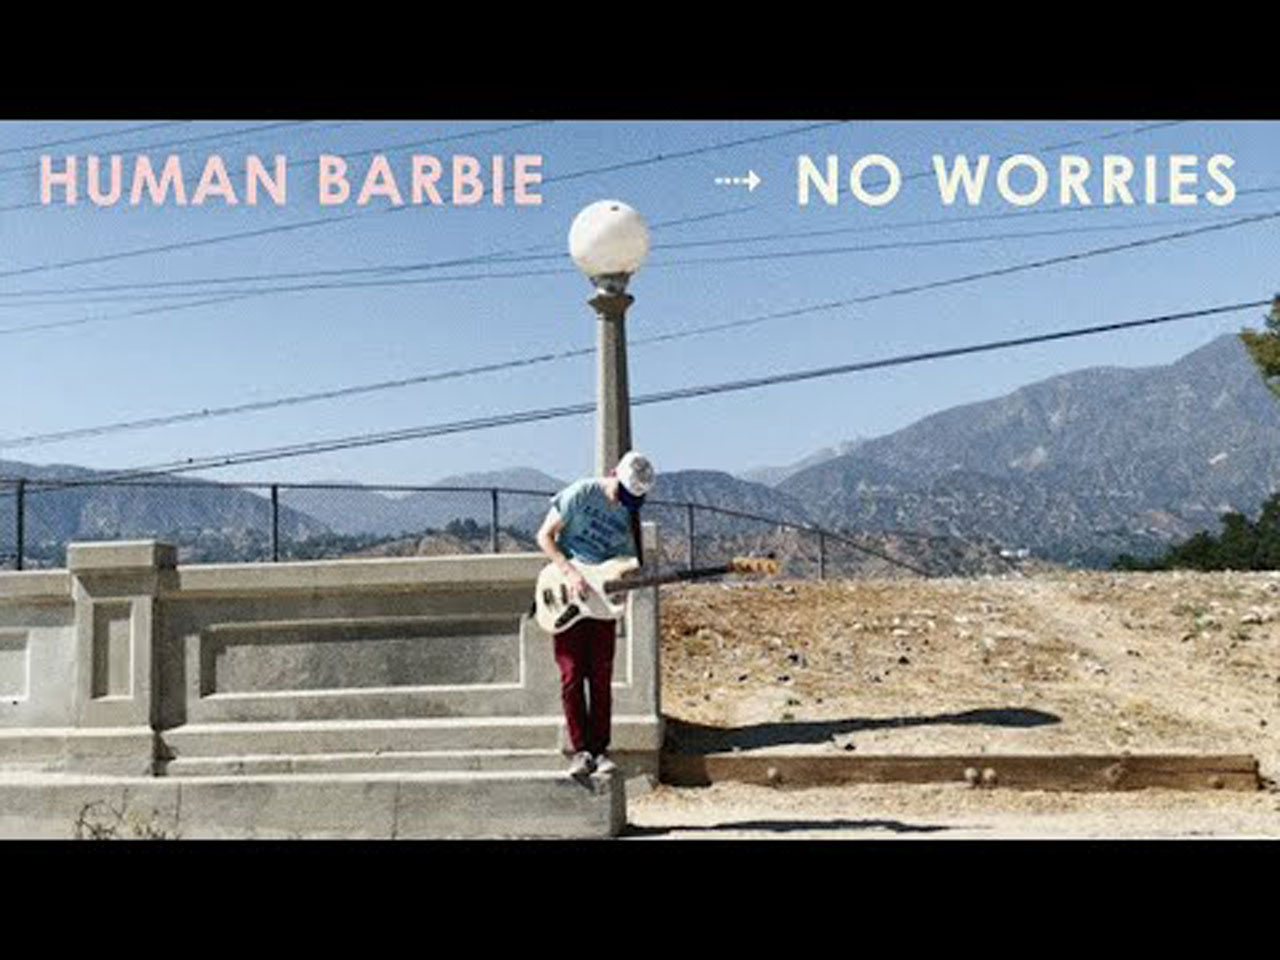 Human Barbie - no worries, Pop music genre, Nagamag Magazine